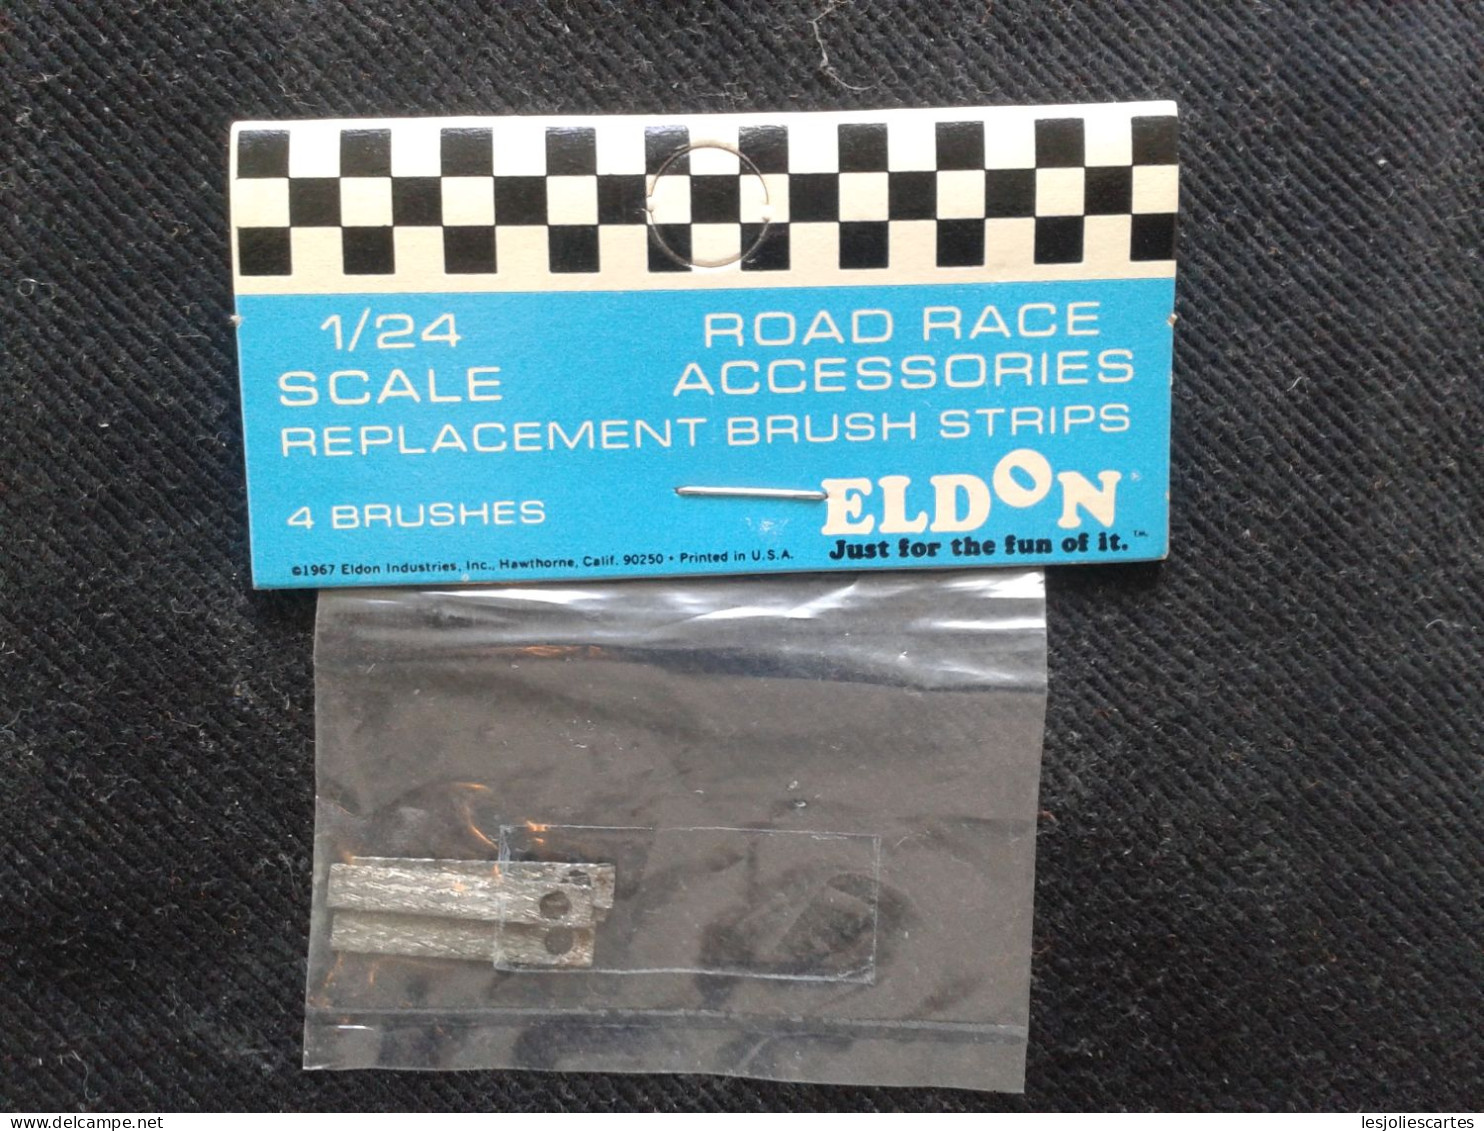 Eldon Replacement Brush Strips Road Race Accessories 1/24 - Circuitos Automóviles